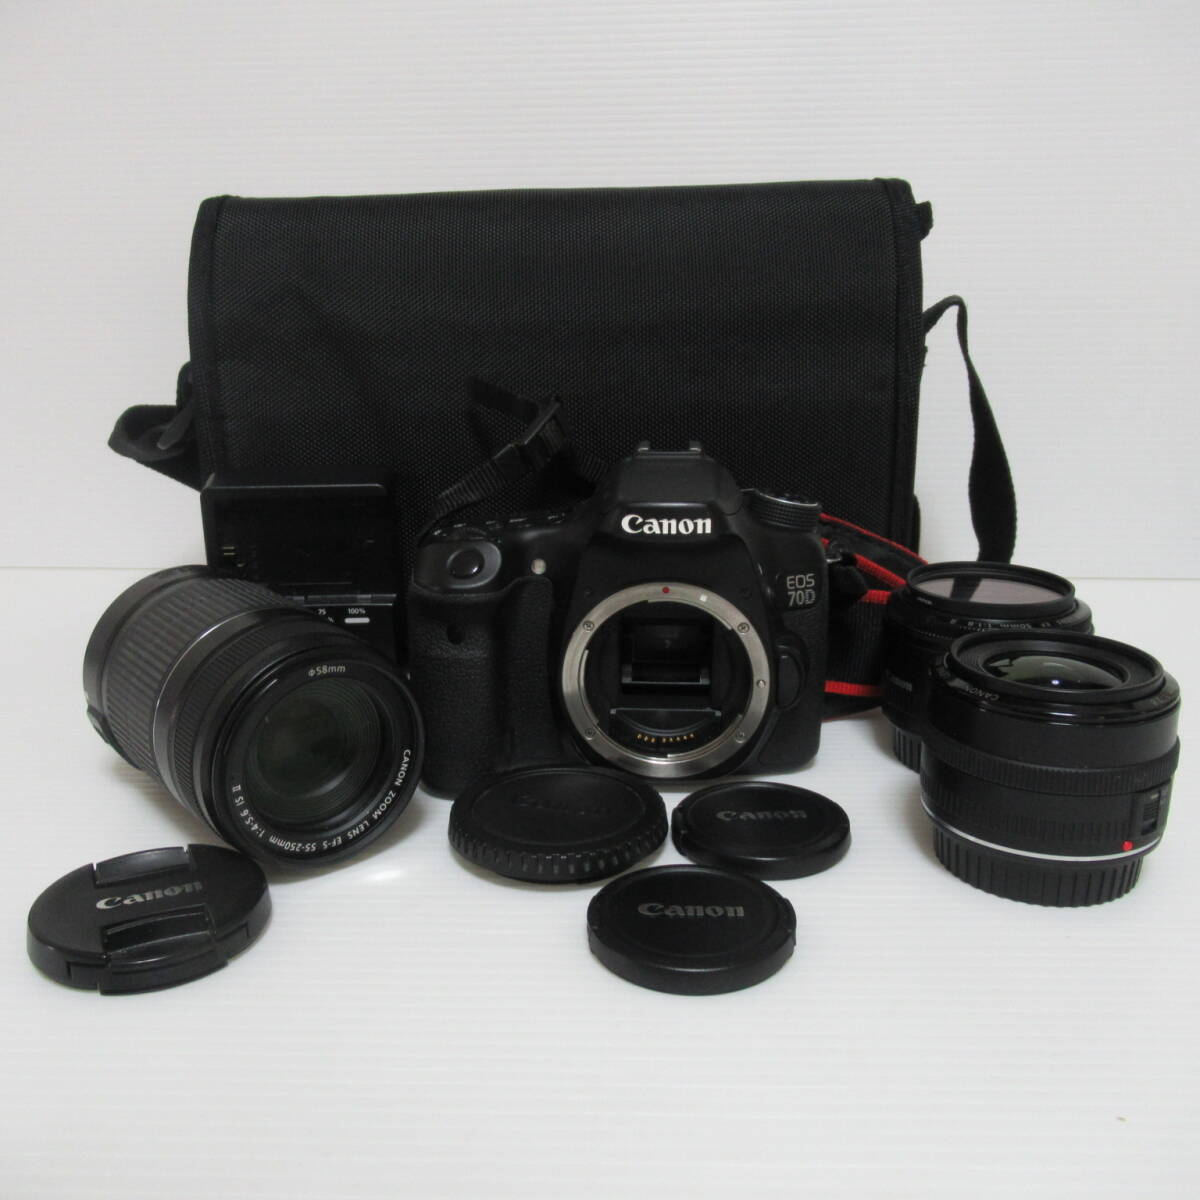  camera Canon EOS 70D case attaching camera lens . summarize set operation not yet verification canon 80 size shipping p-2585209-302-mrrz